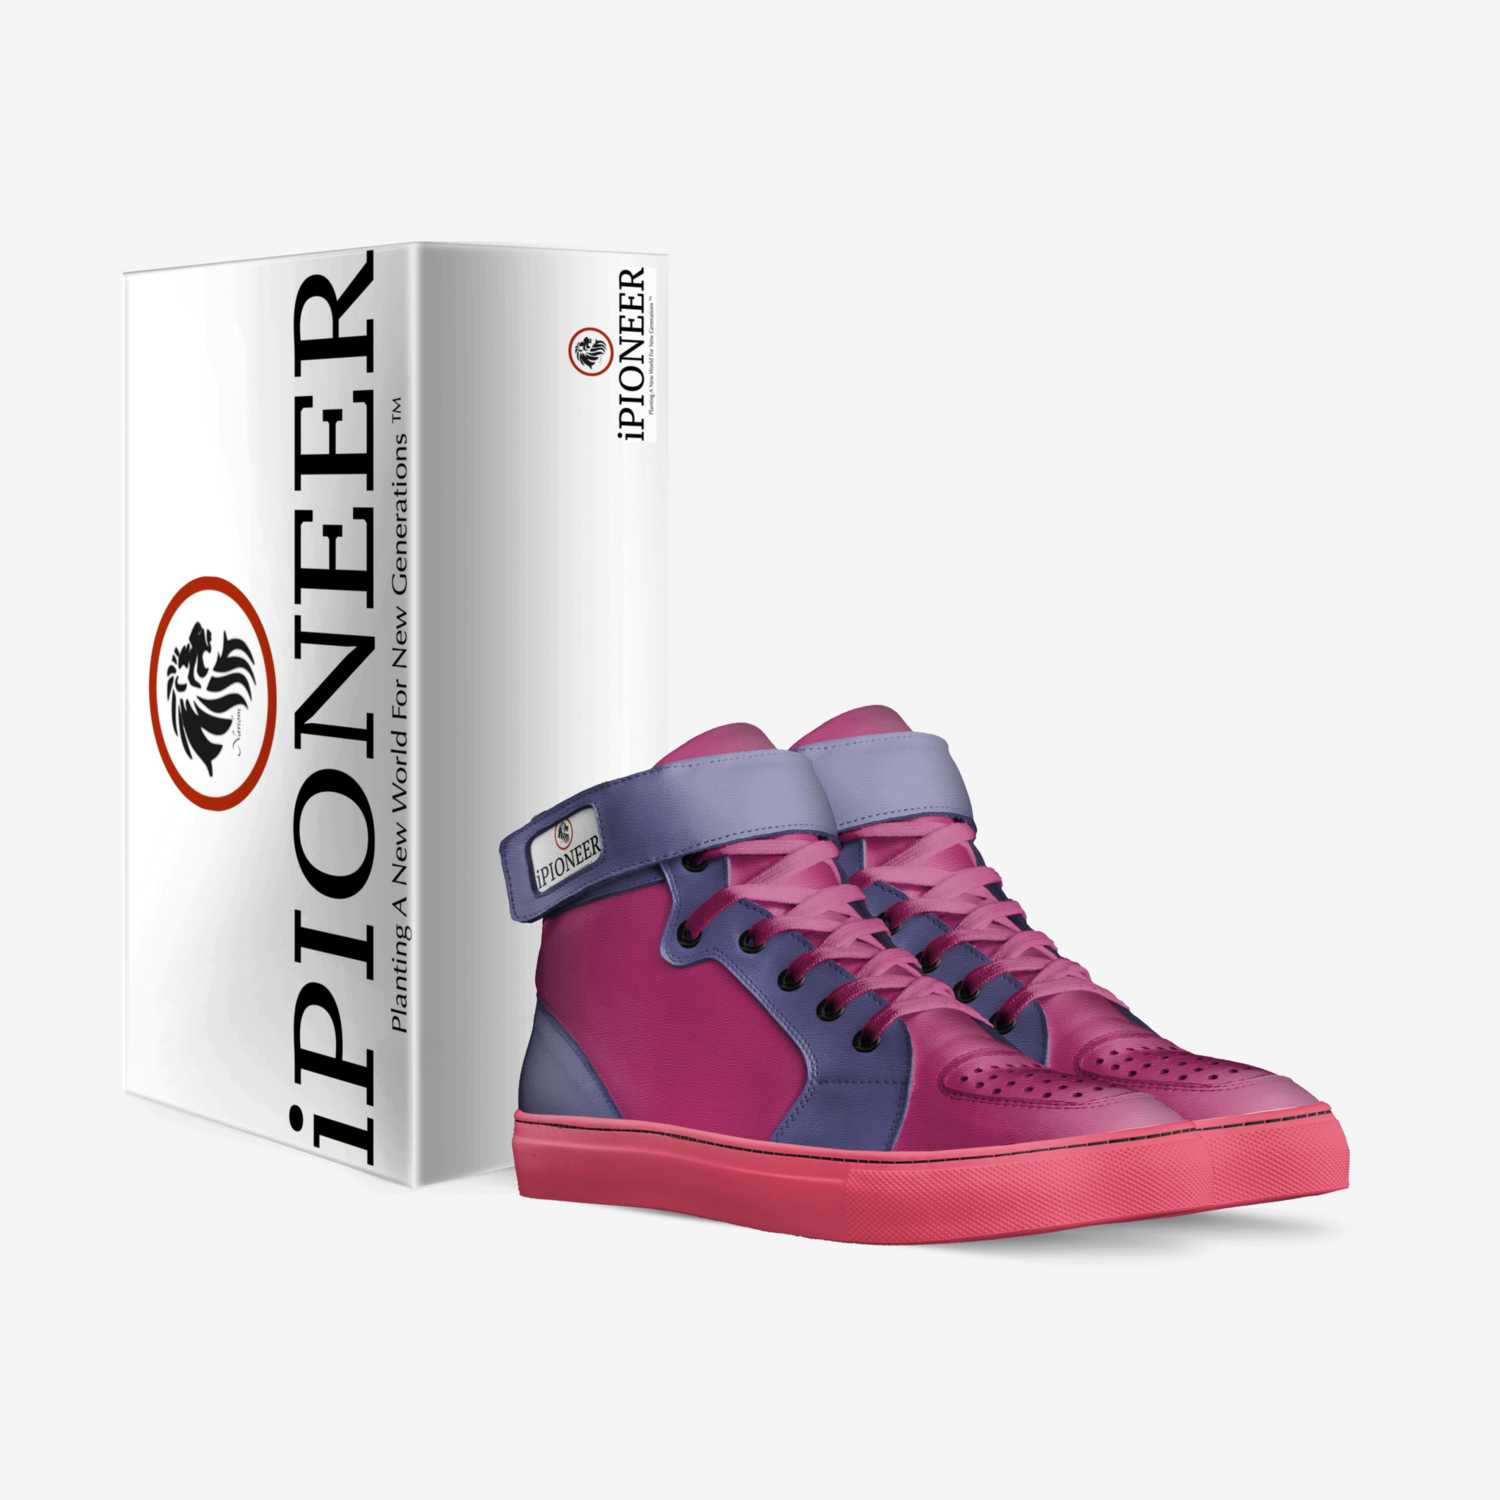 iPioneerTiffsEditi custom made in Italy shoes by Marlon D. Hester Sr. | Box view